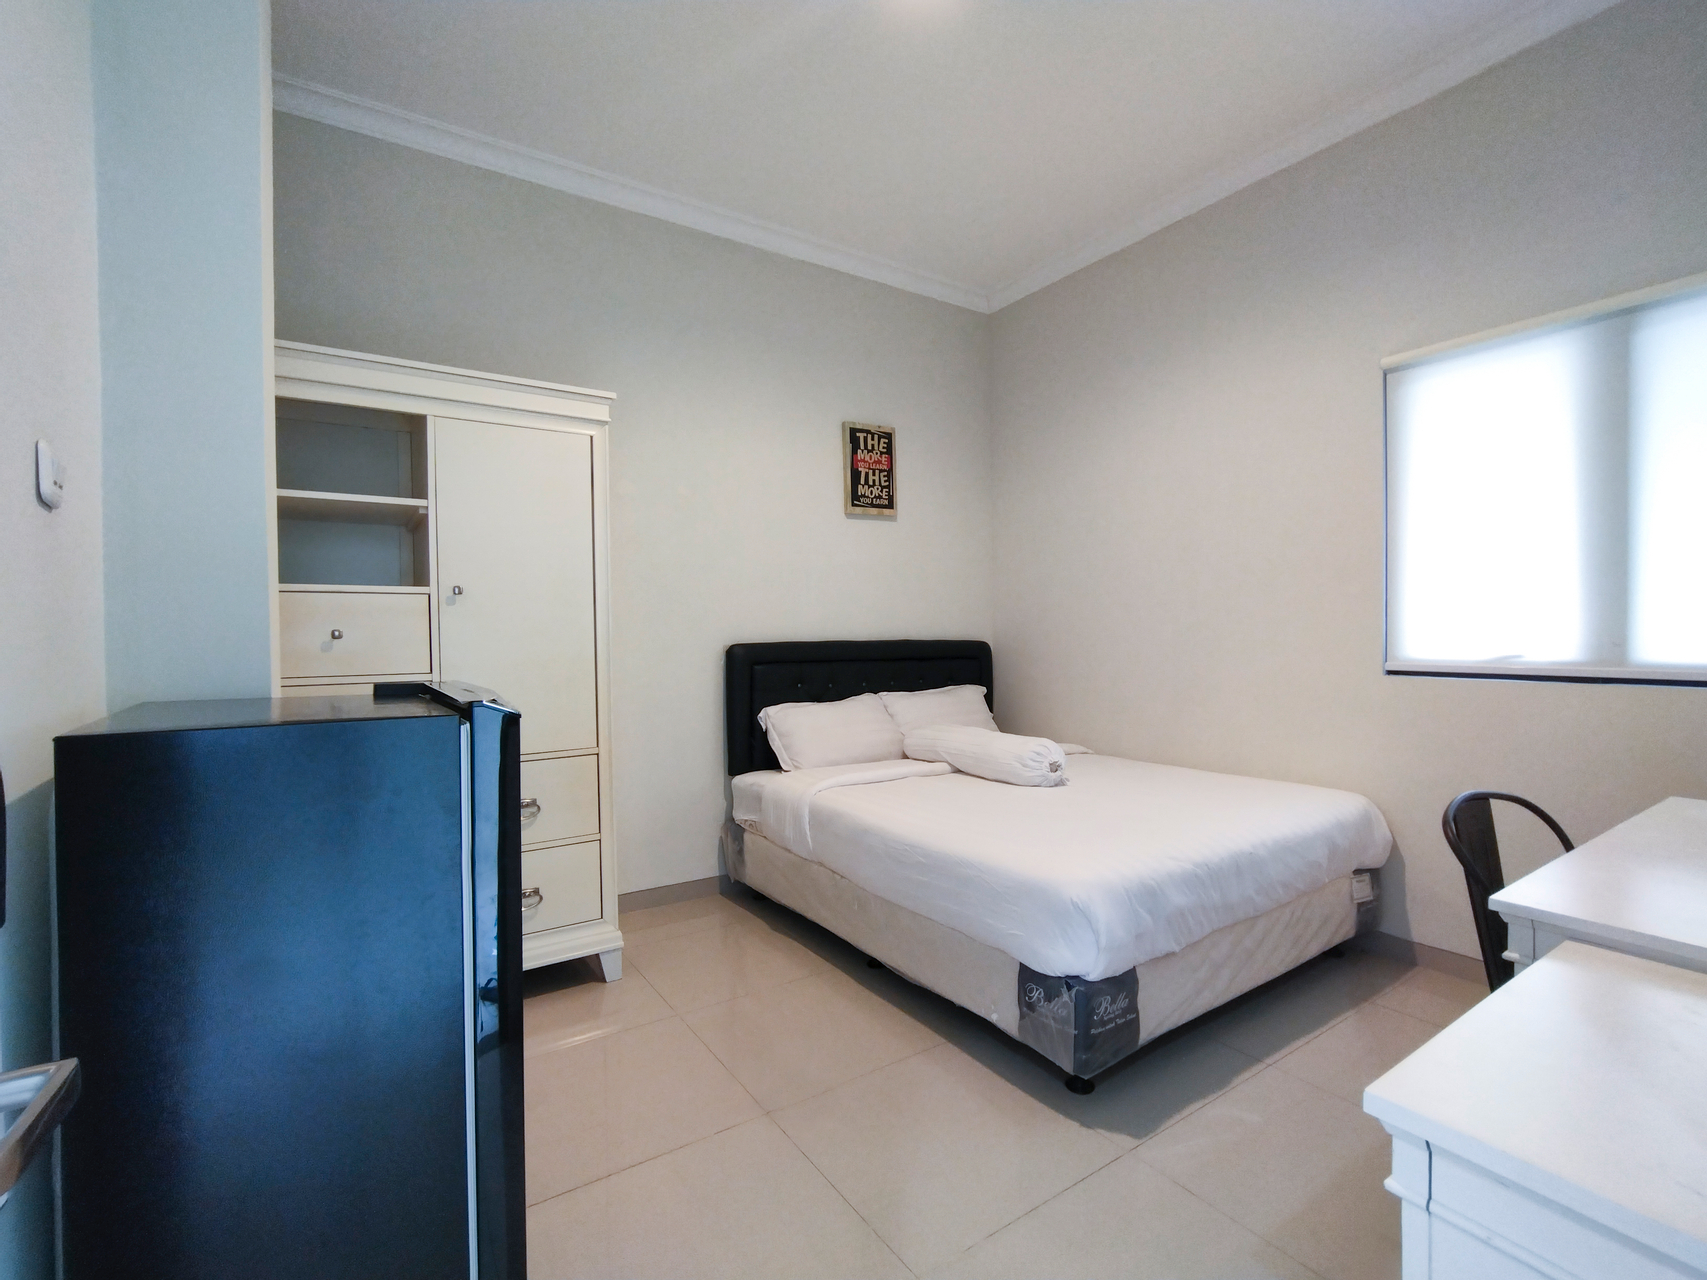 Bedroom 3, Djuragan Kamar Bandahara, Malang